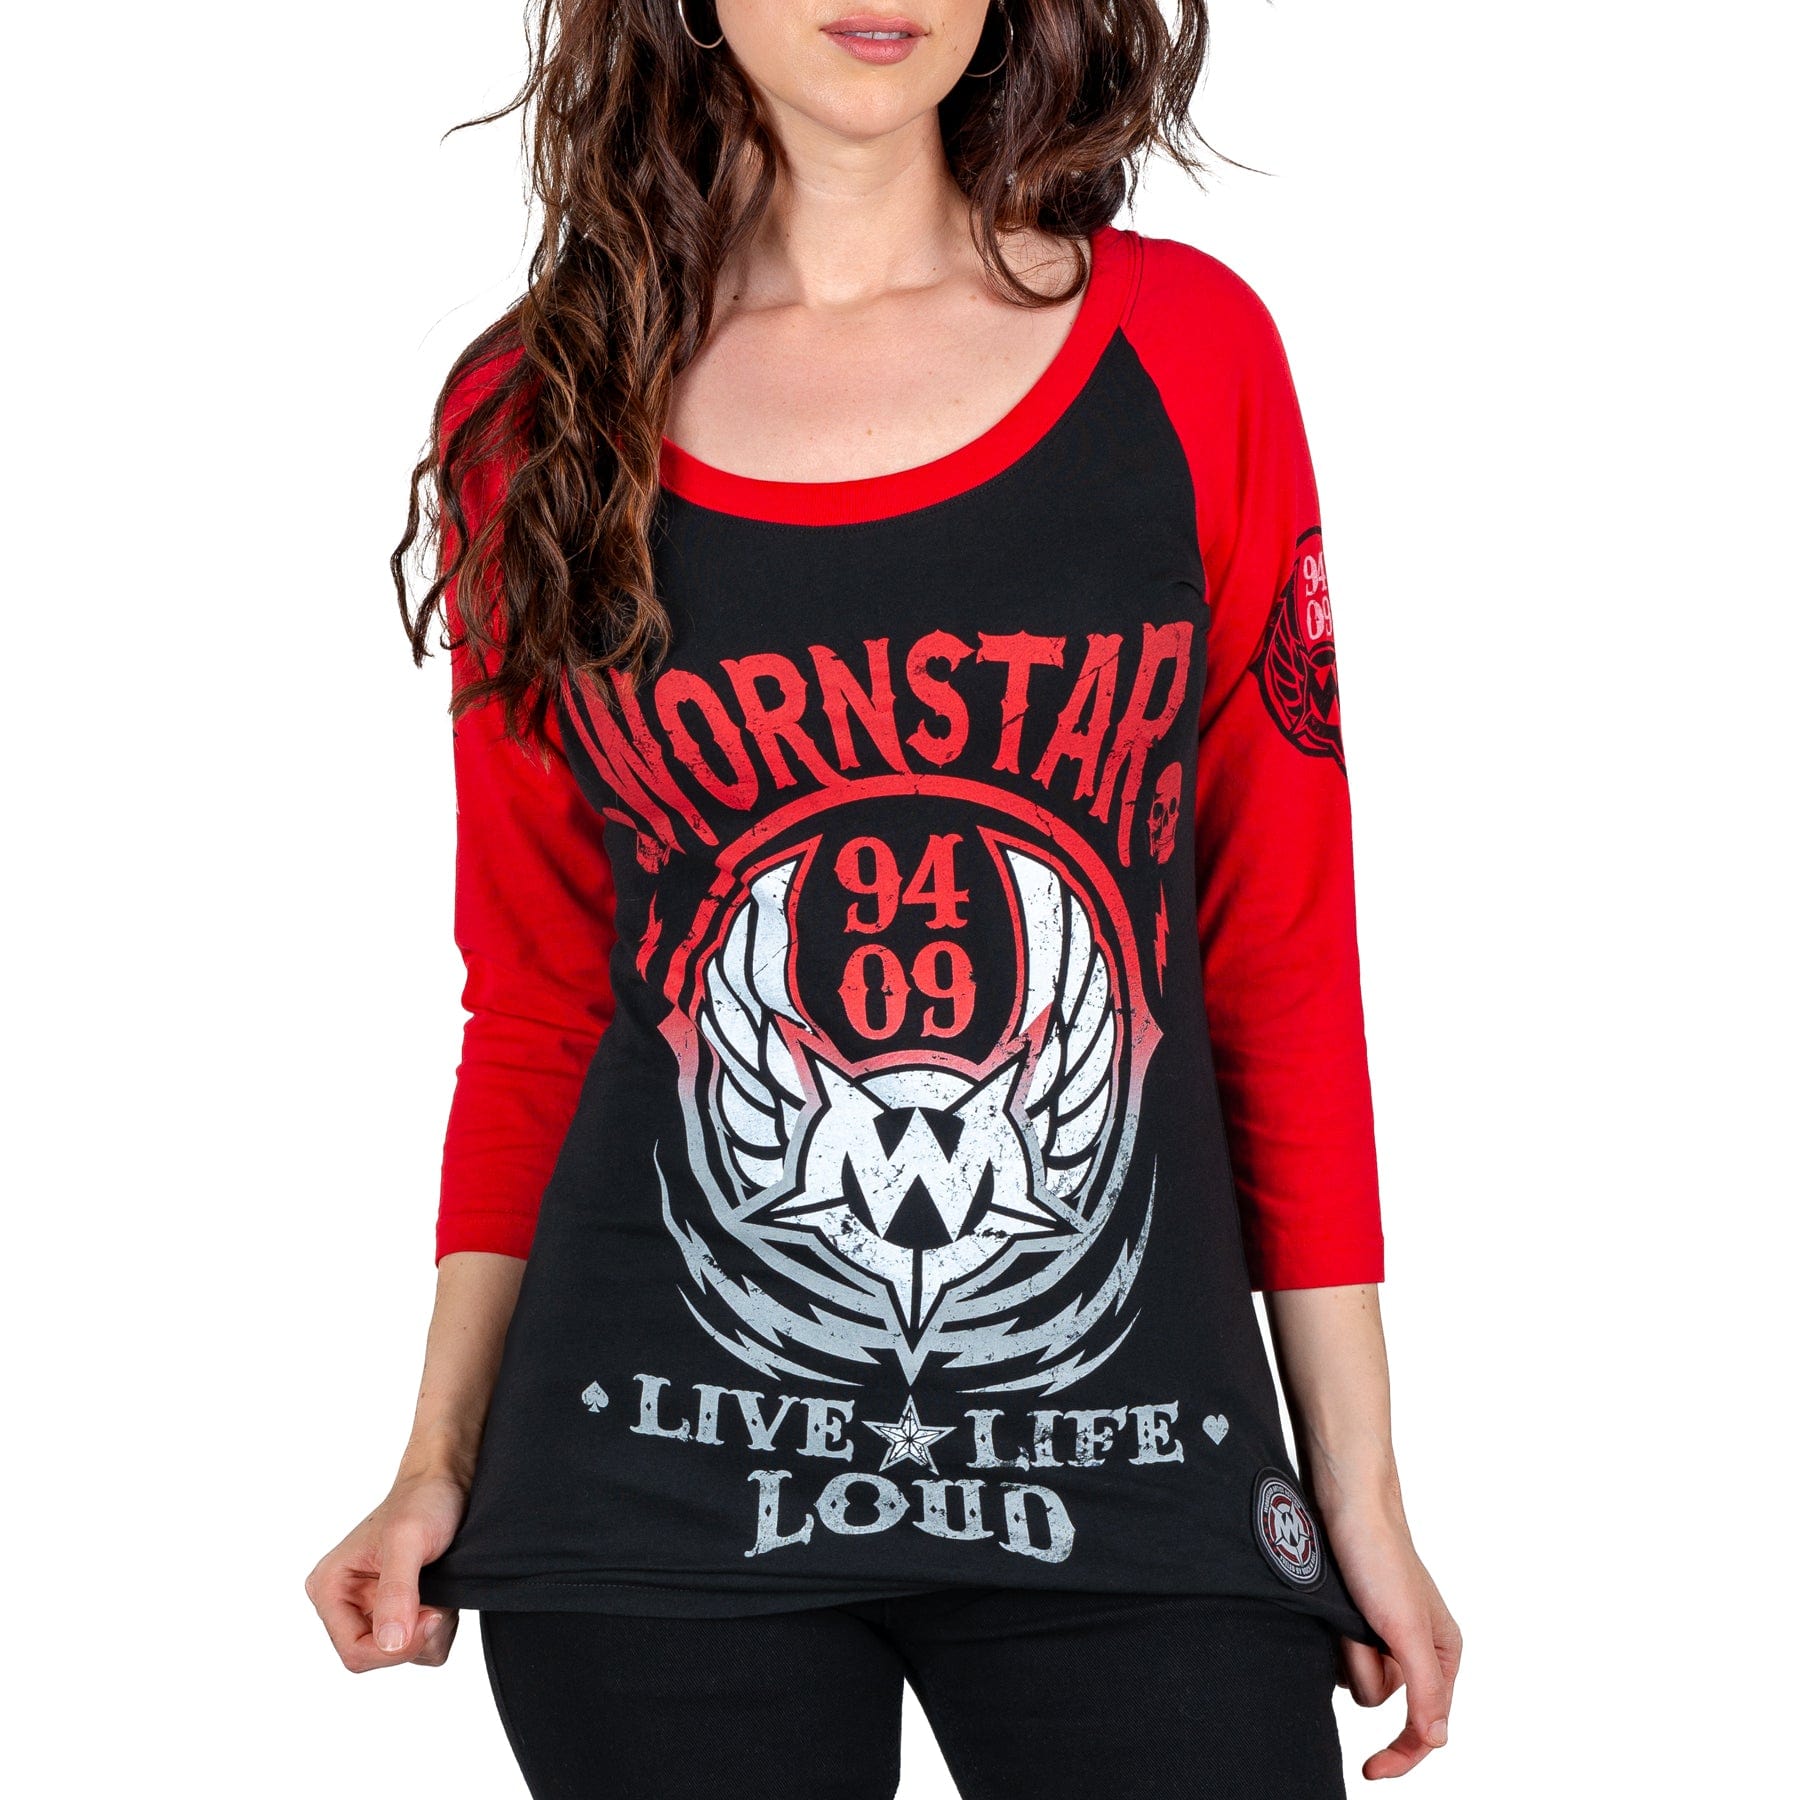 Wornstar Clothing Womens Tee. Live Life Loud Raglan T-Shirt - Red/Black